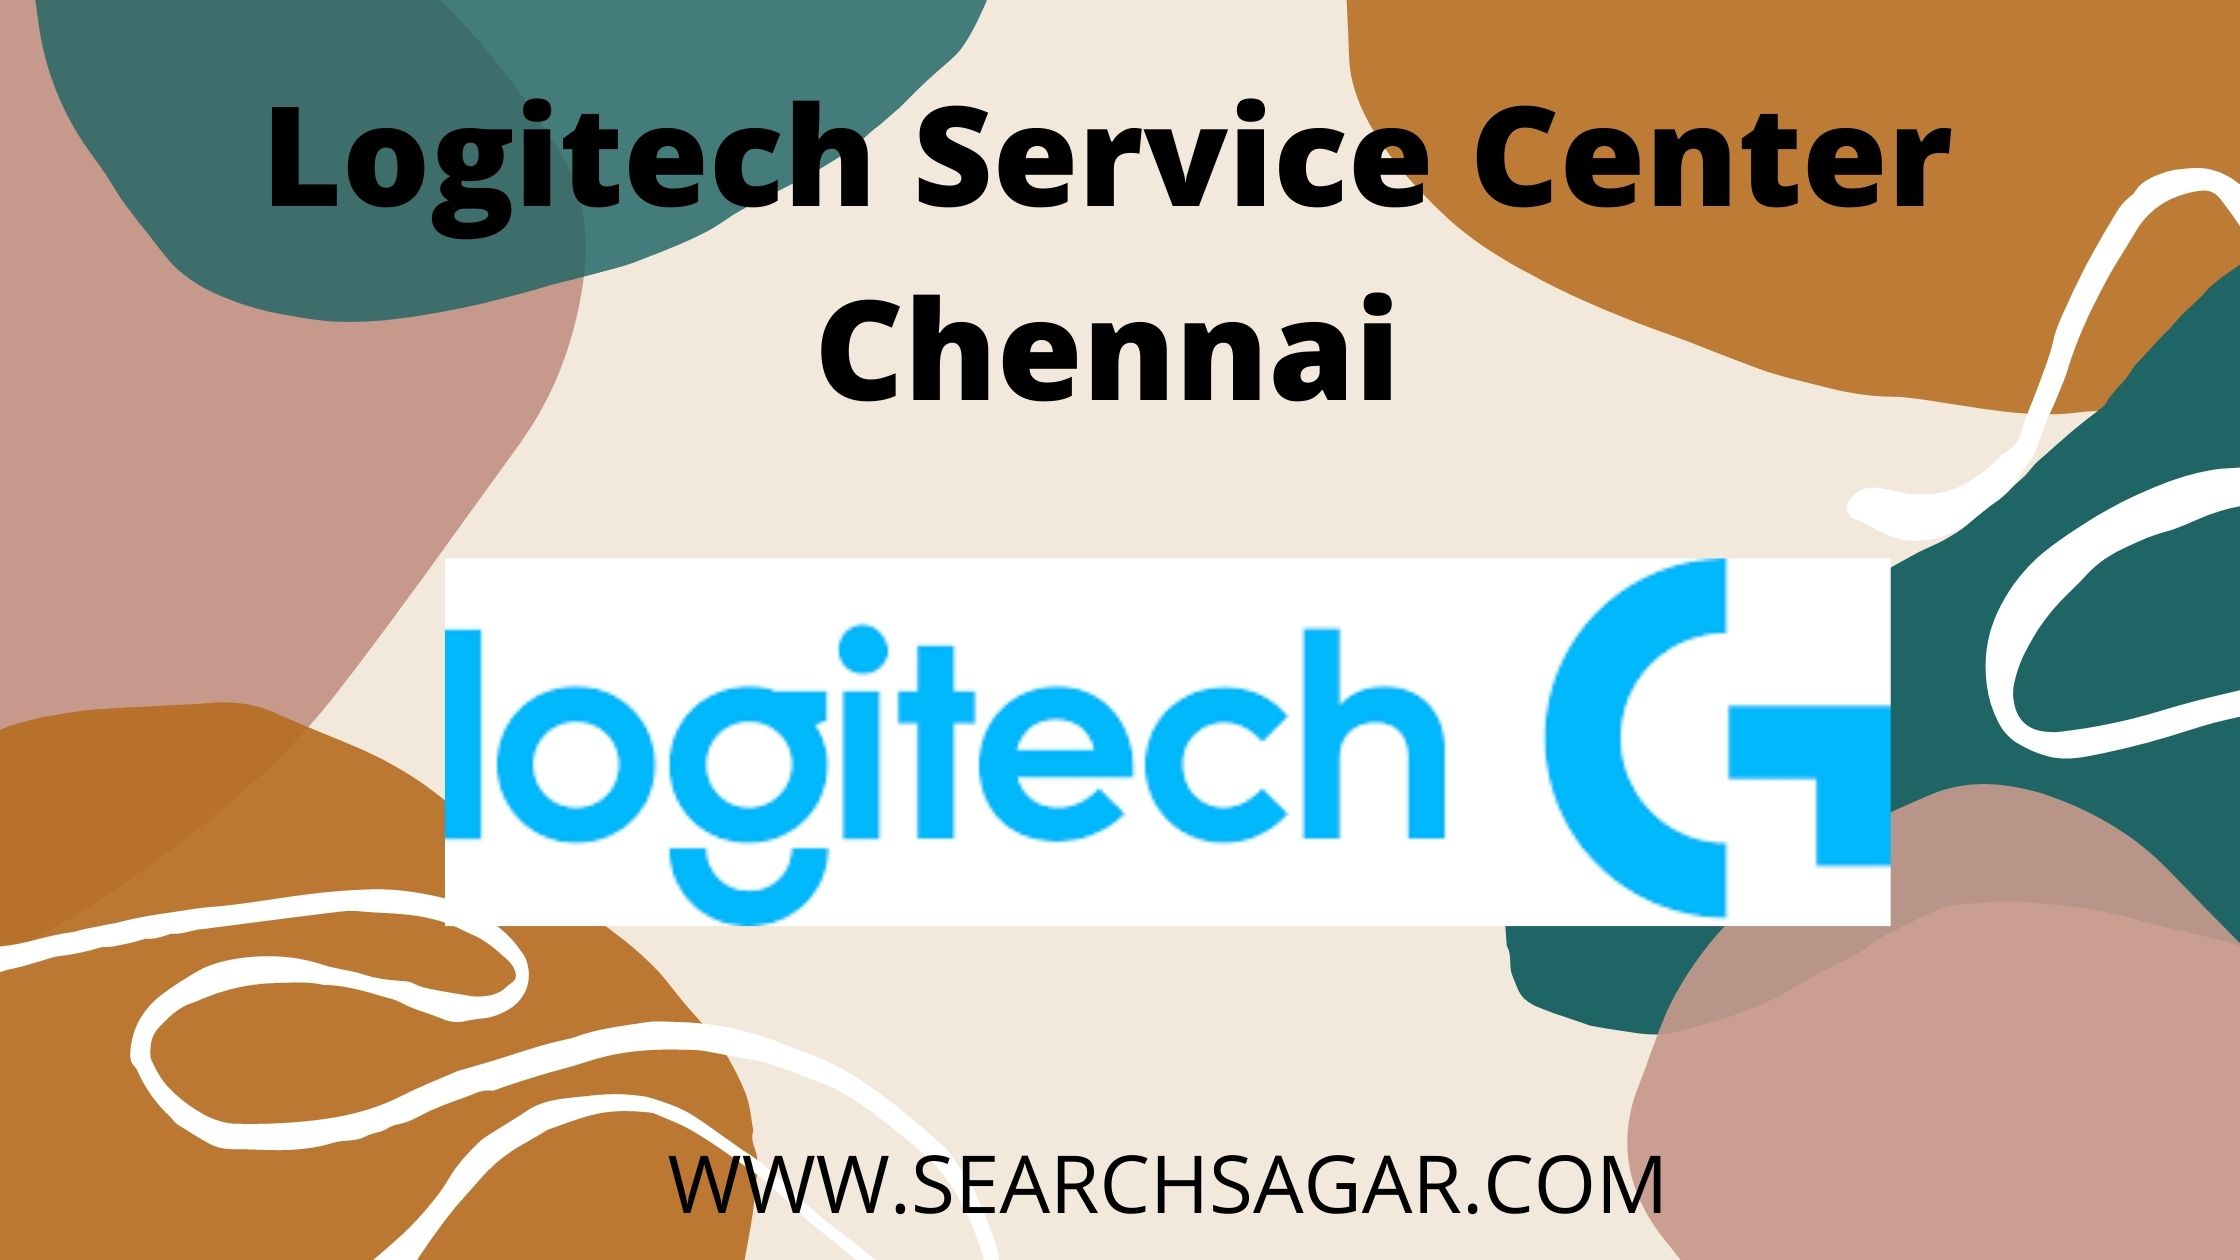 Logitech Service Center Chennai